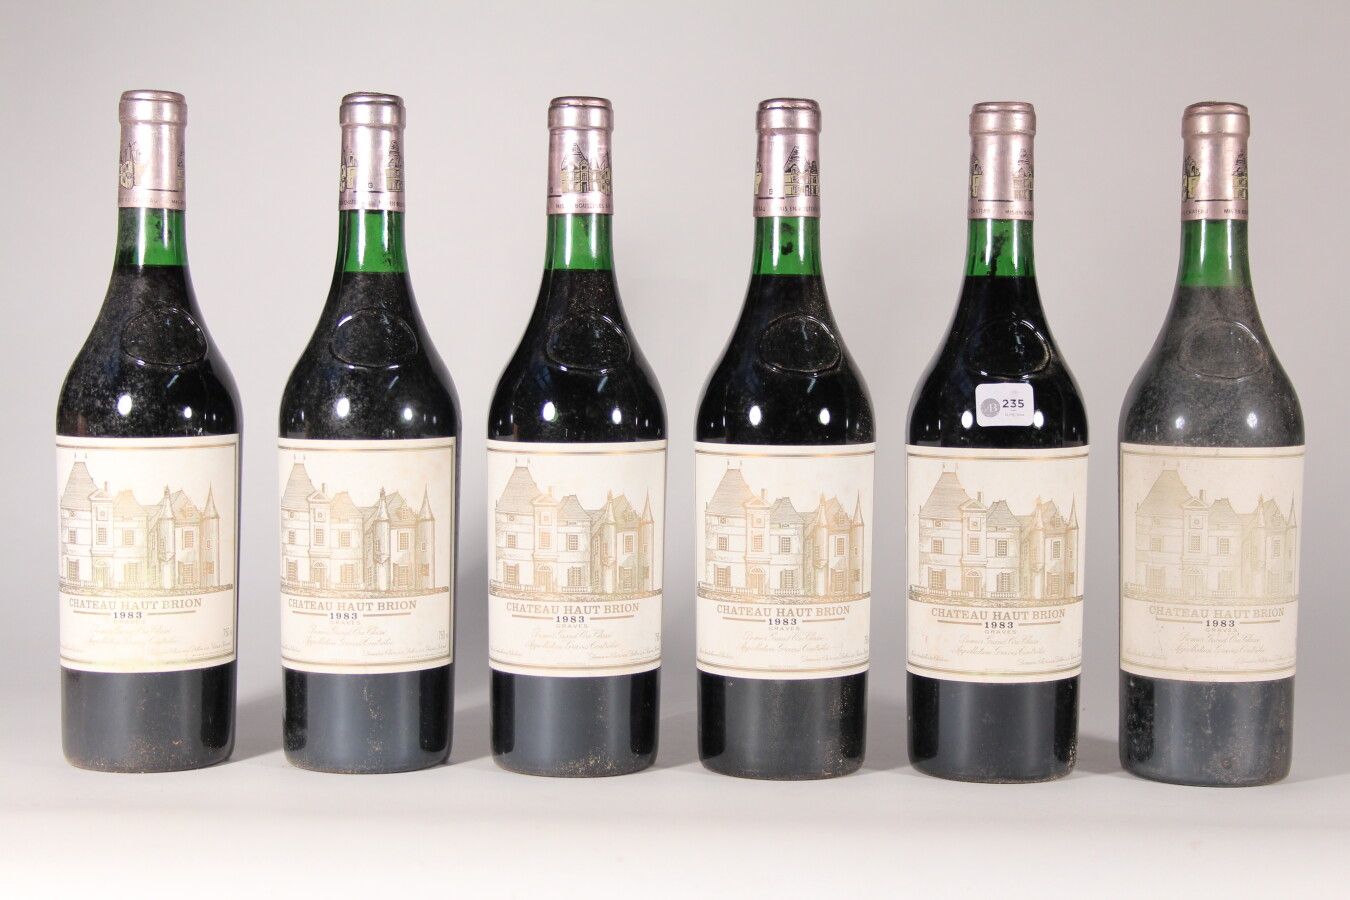 Null 1983 - Château Haut Brion

Pessac-Léognan Red - 6 bottles